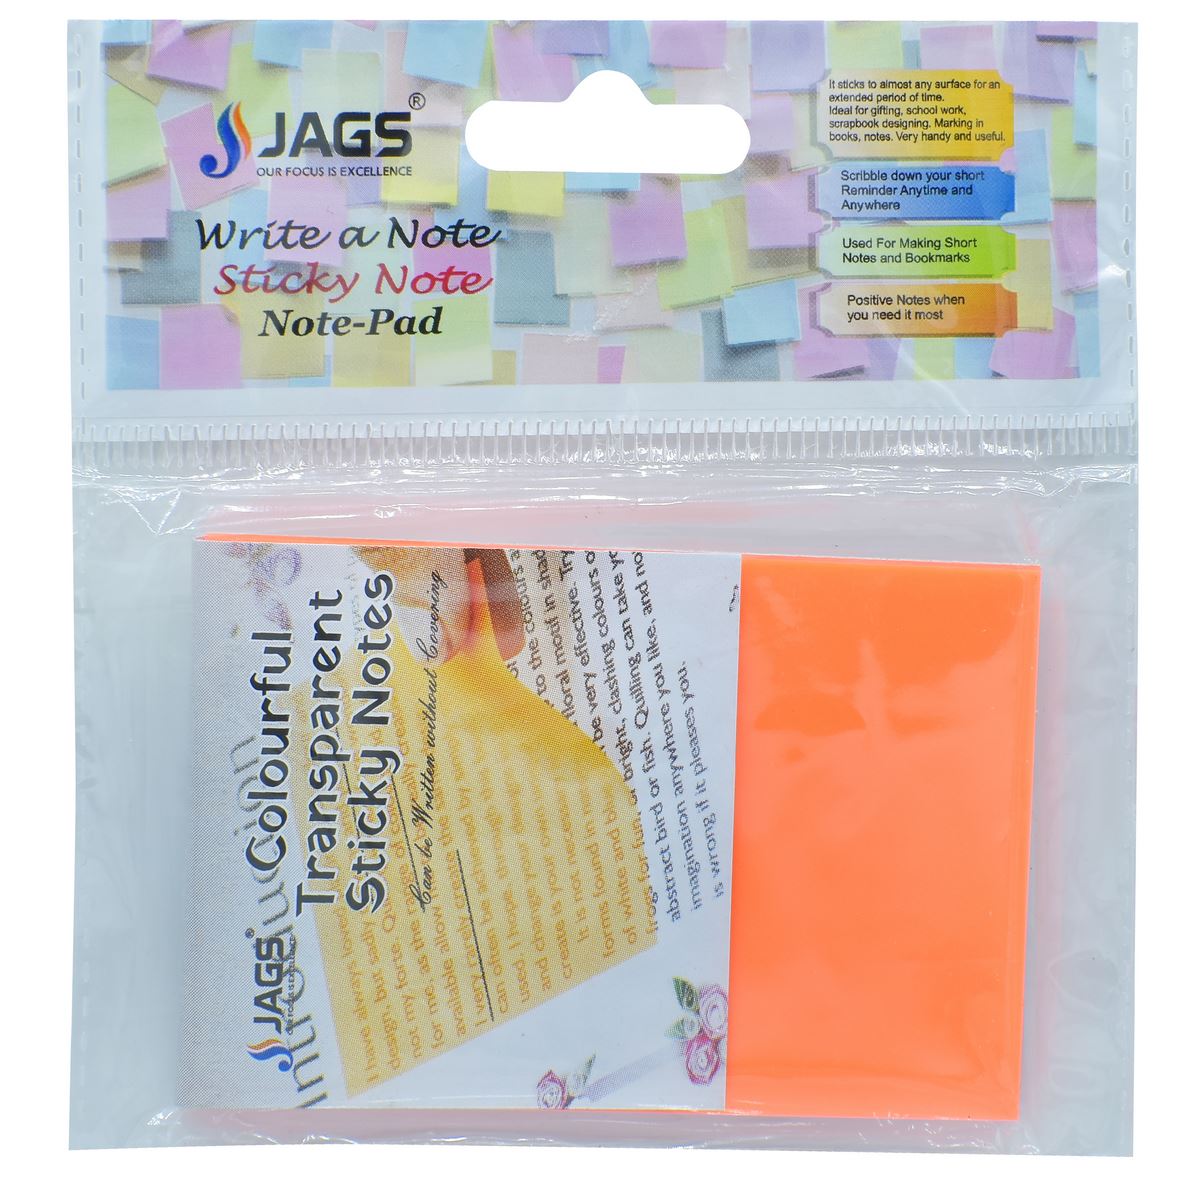 jags-mumbai Sticky Notes Jags Transparent Sticky Note 50 Sheet Orange